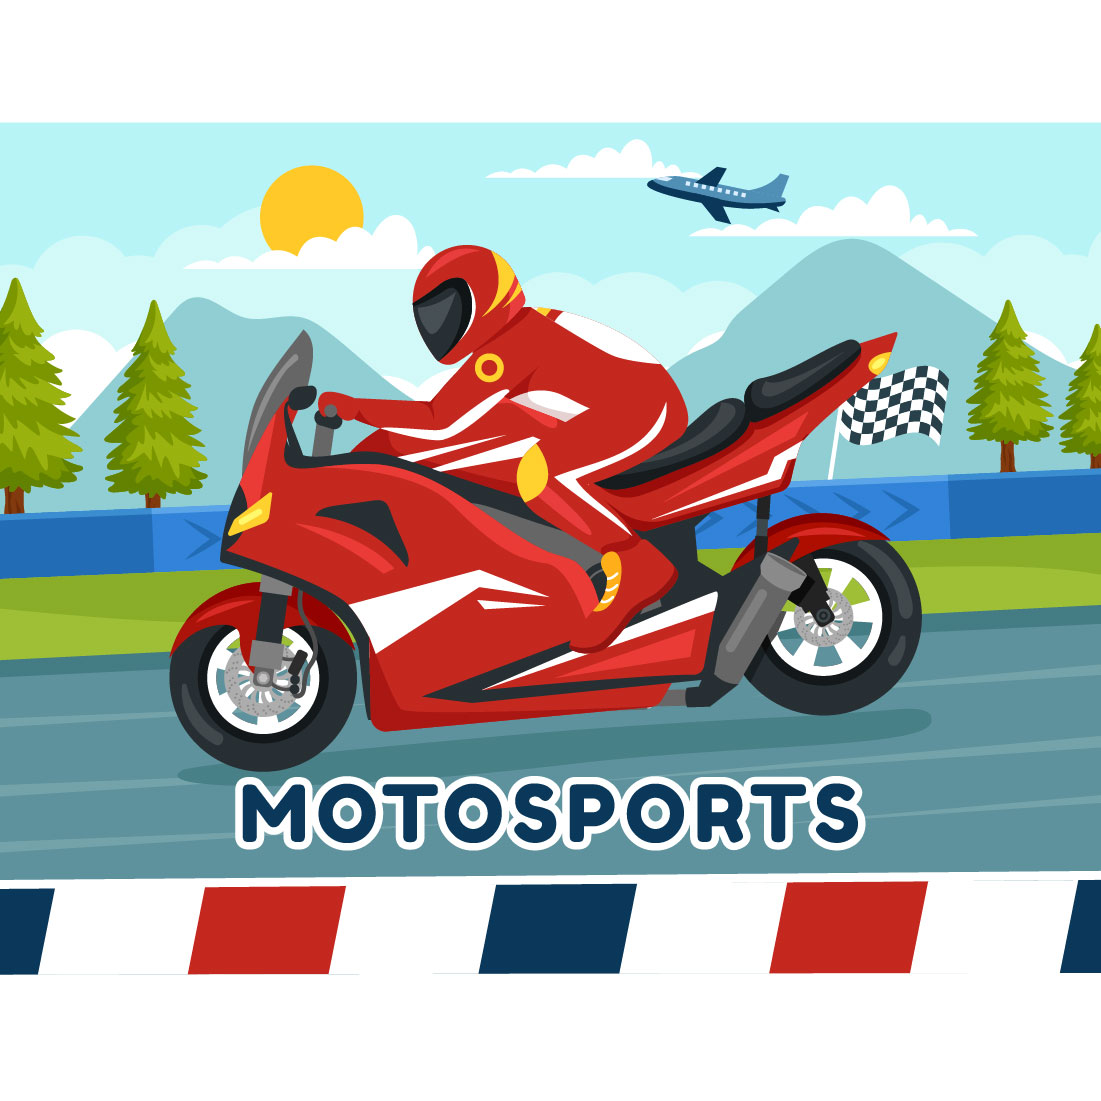 12 Racing Motosport Illustration cover image.